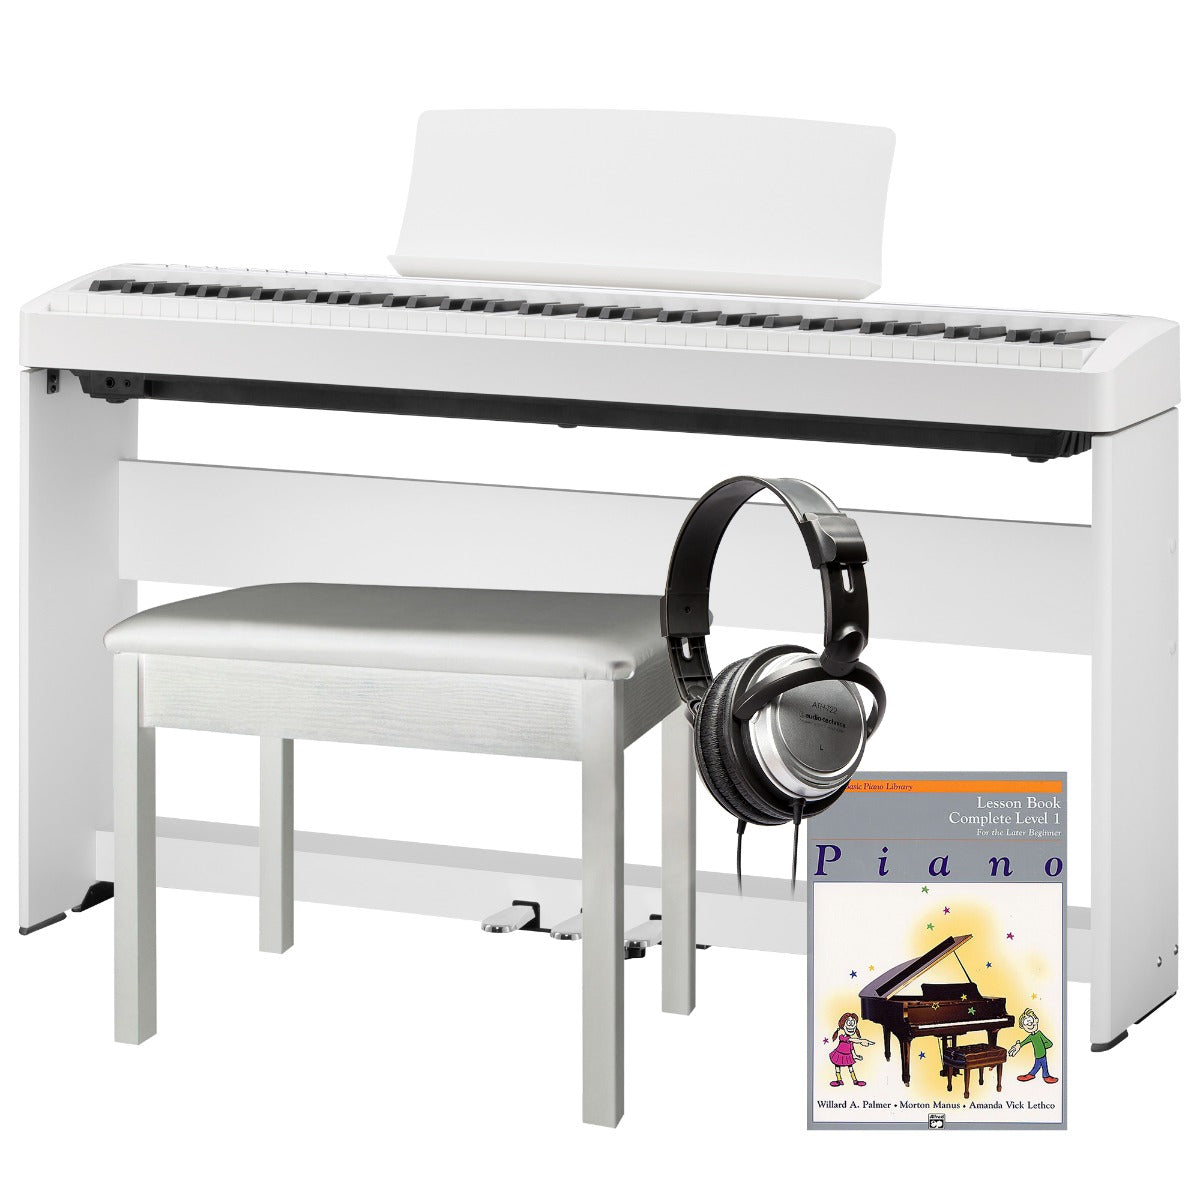 Kawai ES120 Portable Digital Piano - White COMPLETE HOME BUNDLE